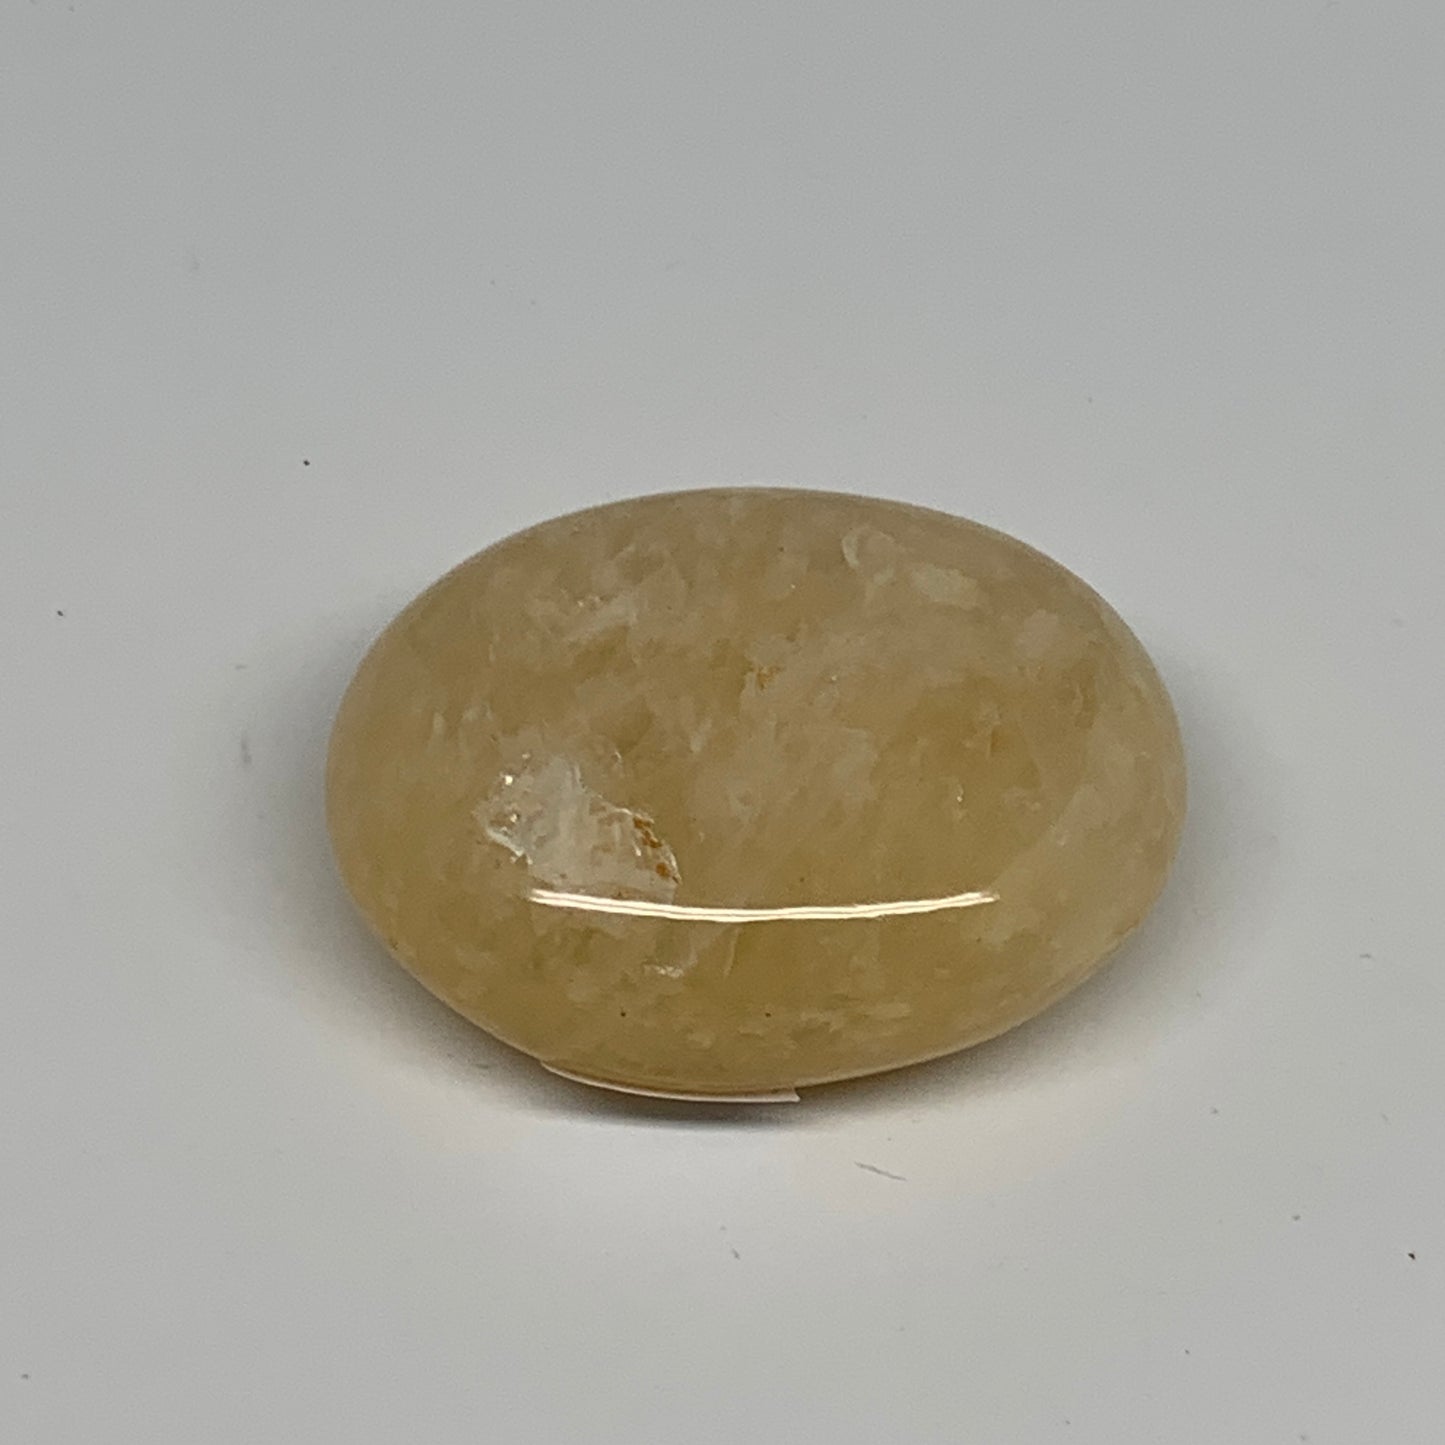 75g,2.1"x1.7"x0.8", Yellow Aventurine Palm-Stone Crystal Stone @India,B29735